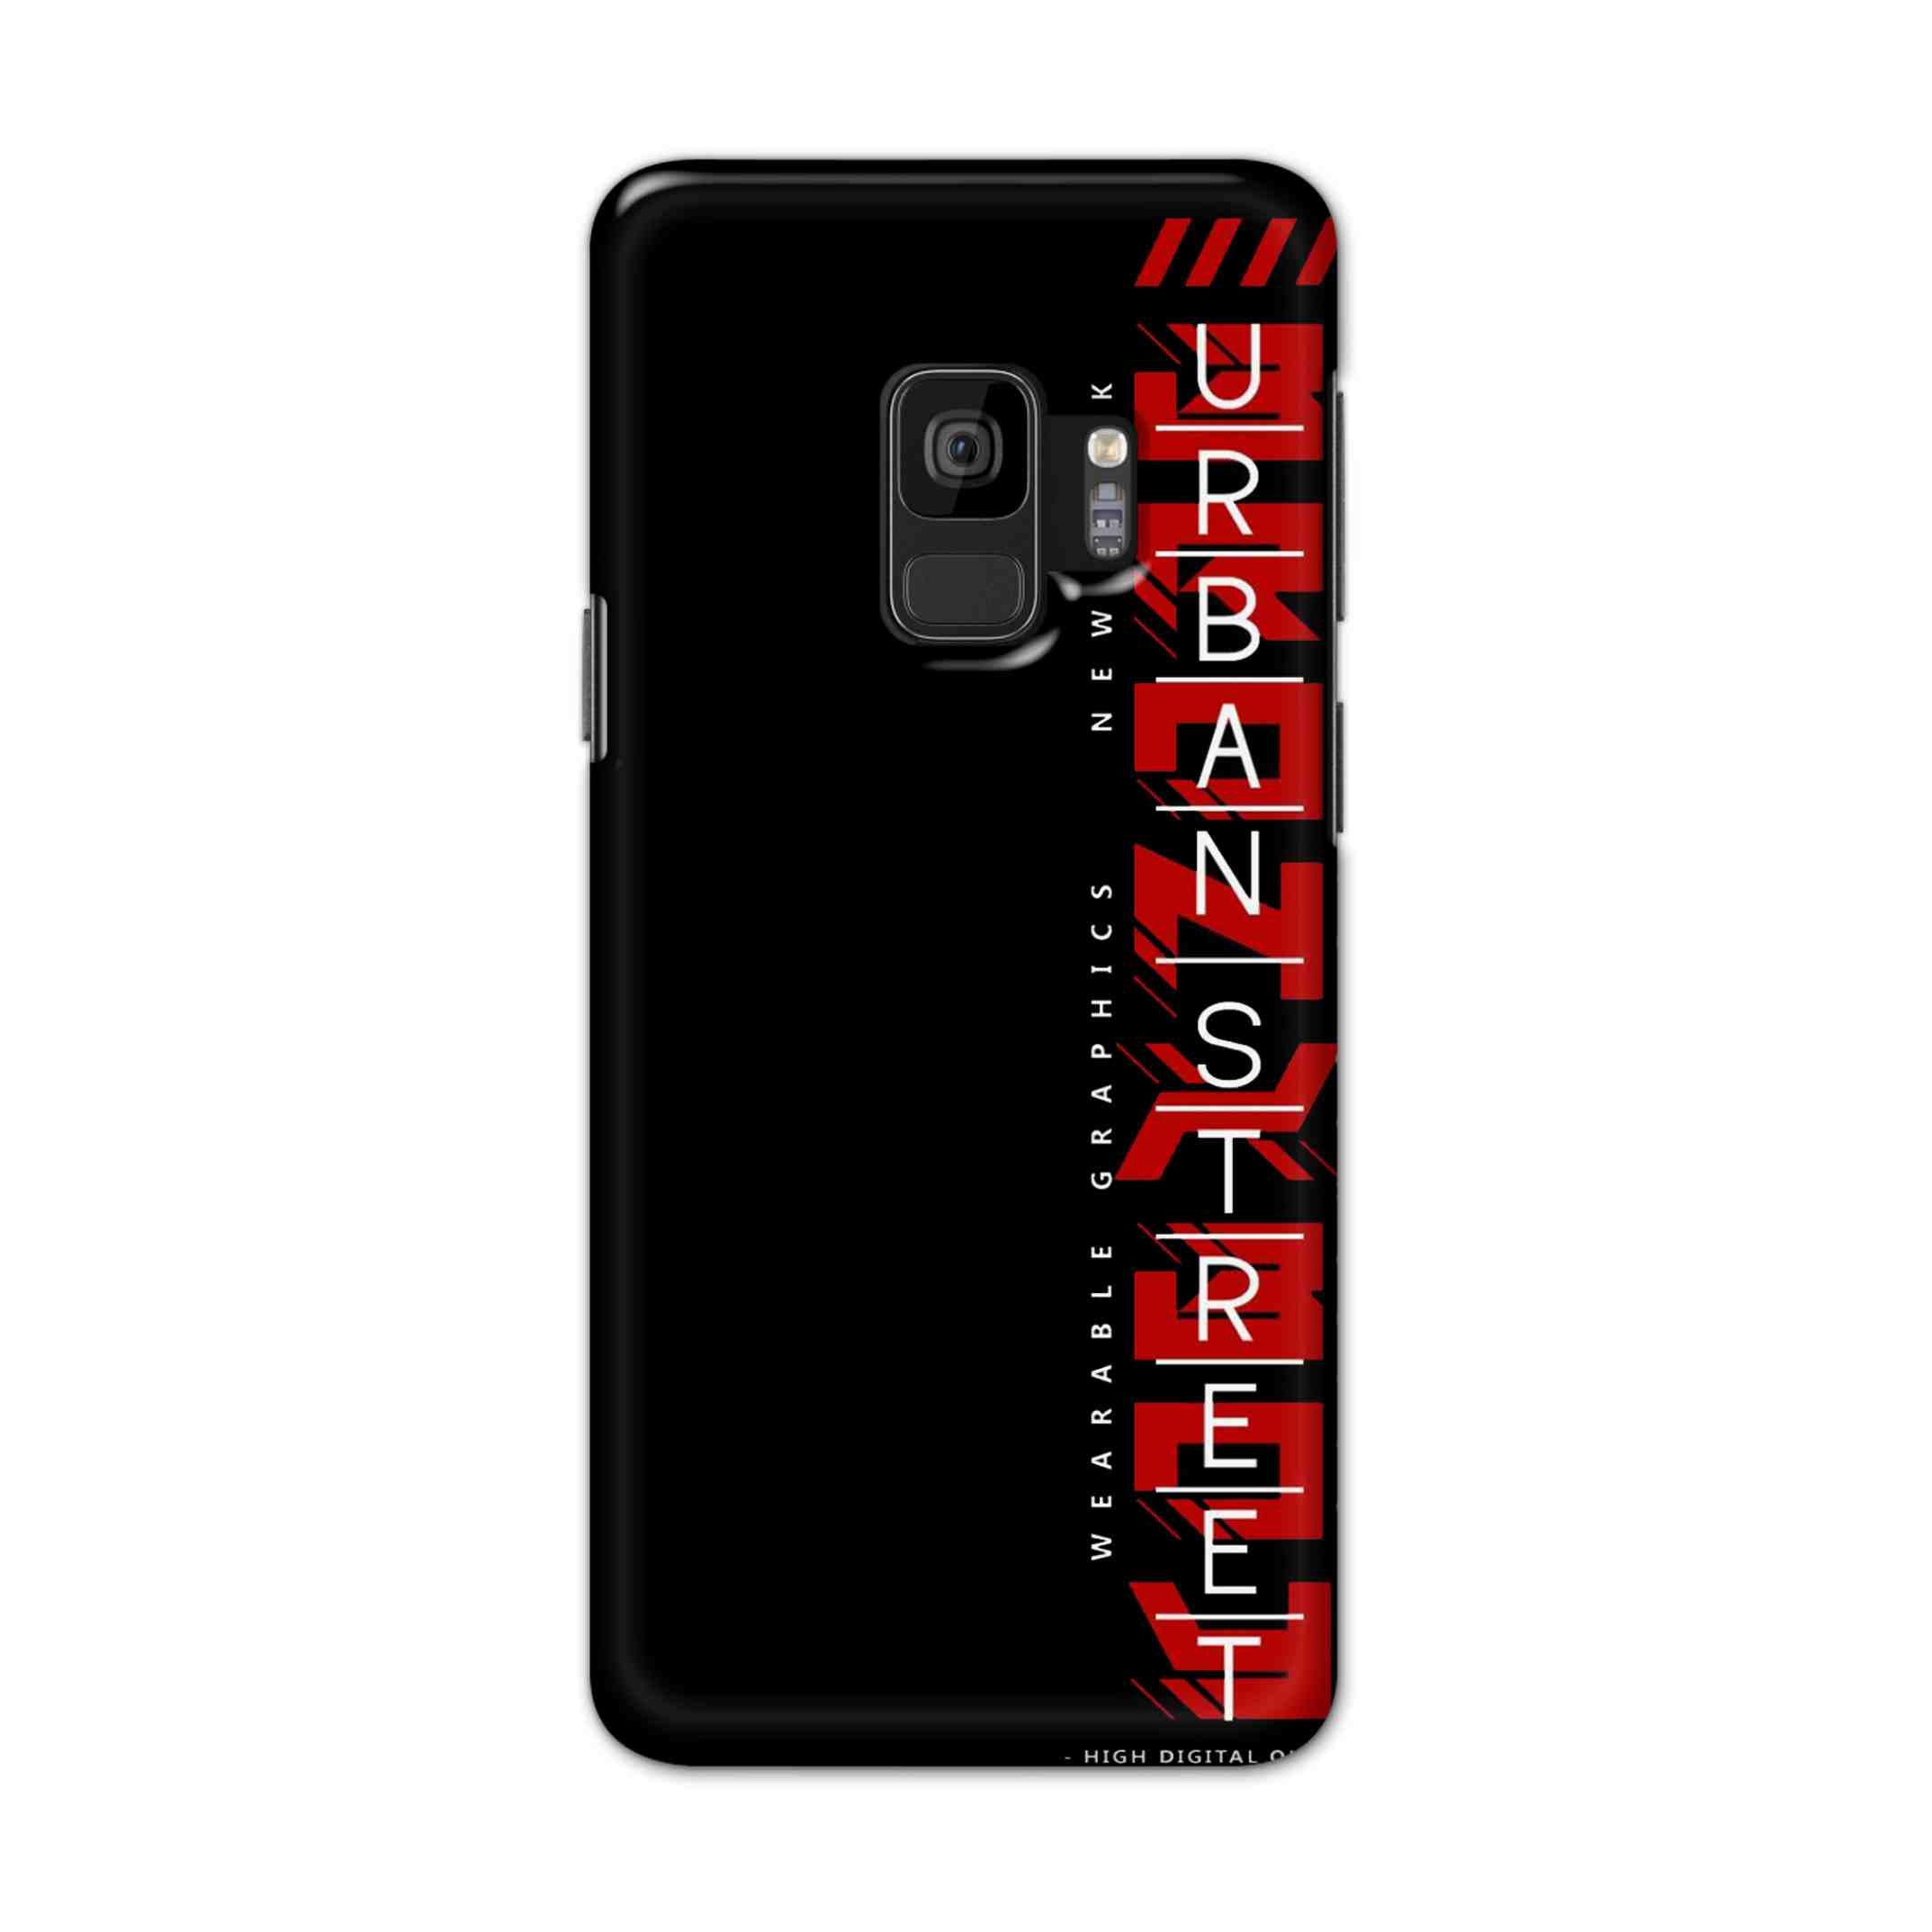 Buy Urban Street Hard Back Mobile Phone Case Cover For Samsung S9 Online